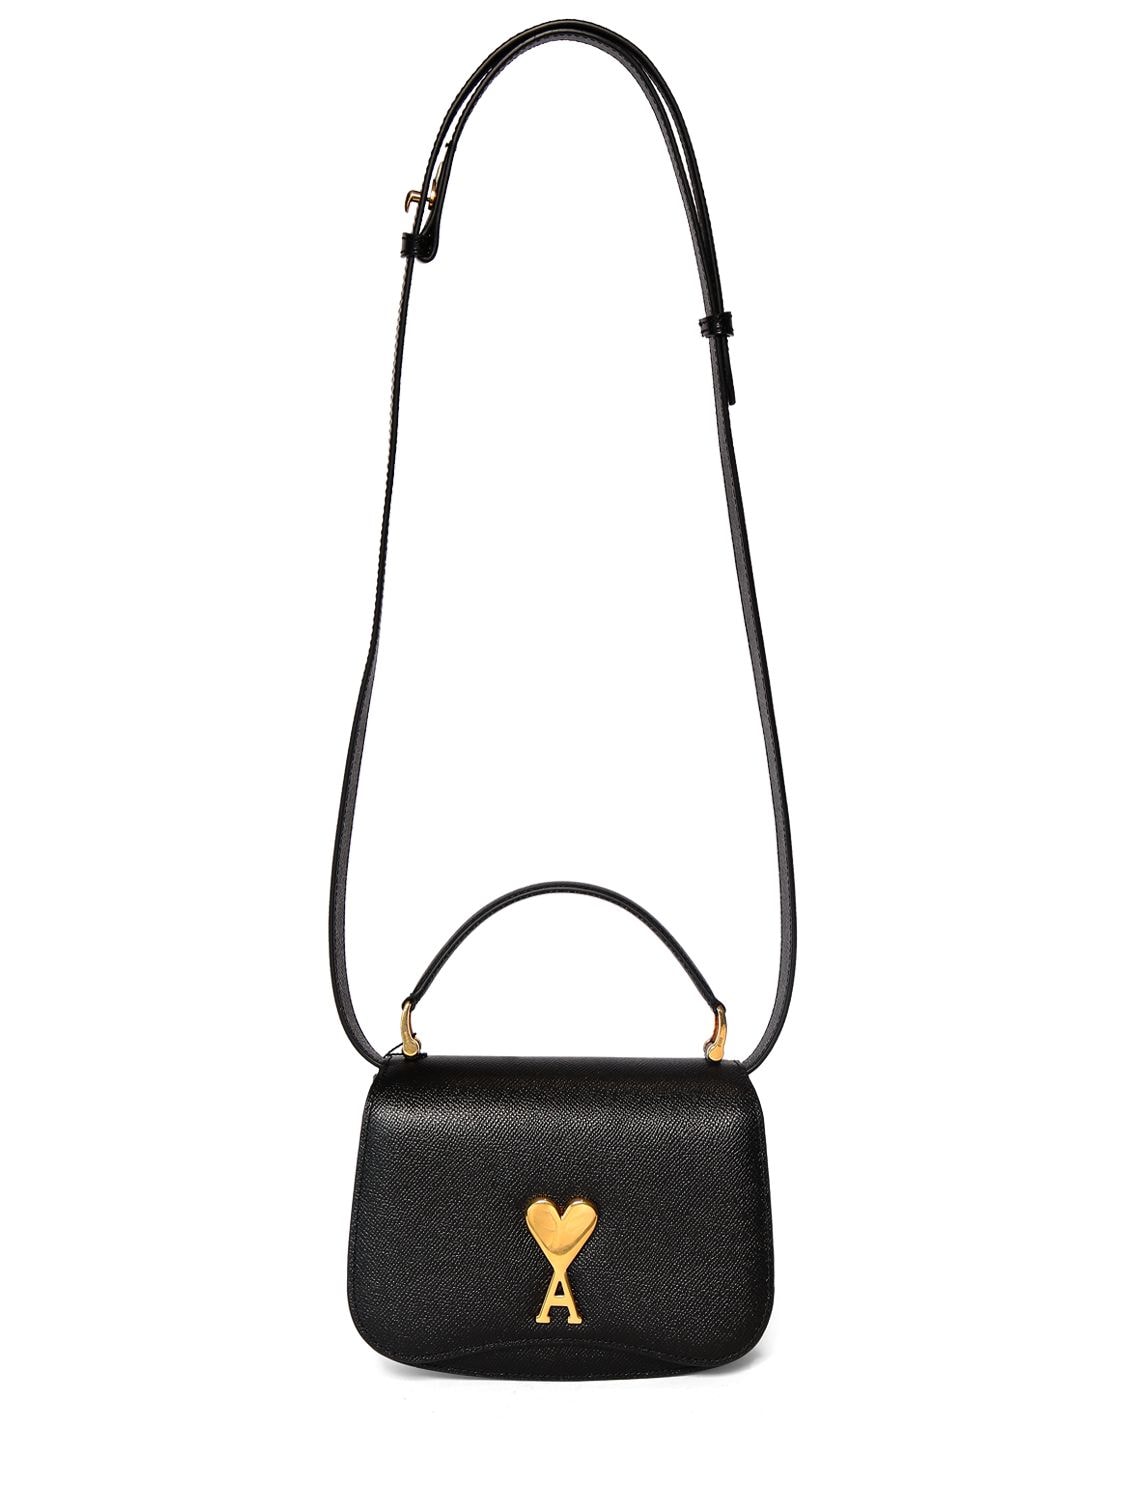 Image of Mini Paris Paris Leather Top Handle Bag